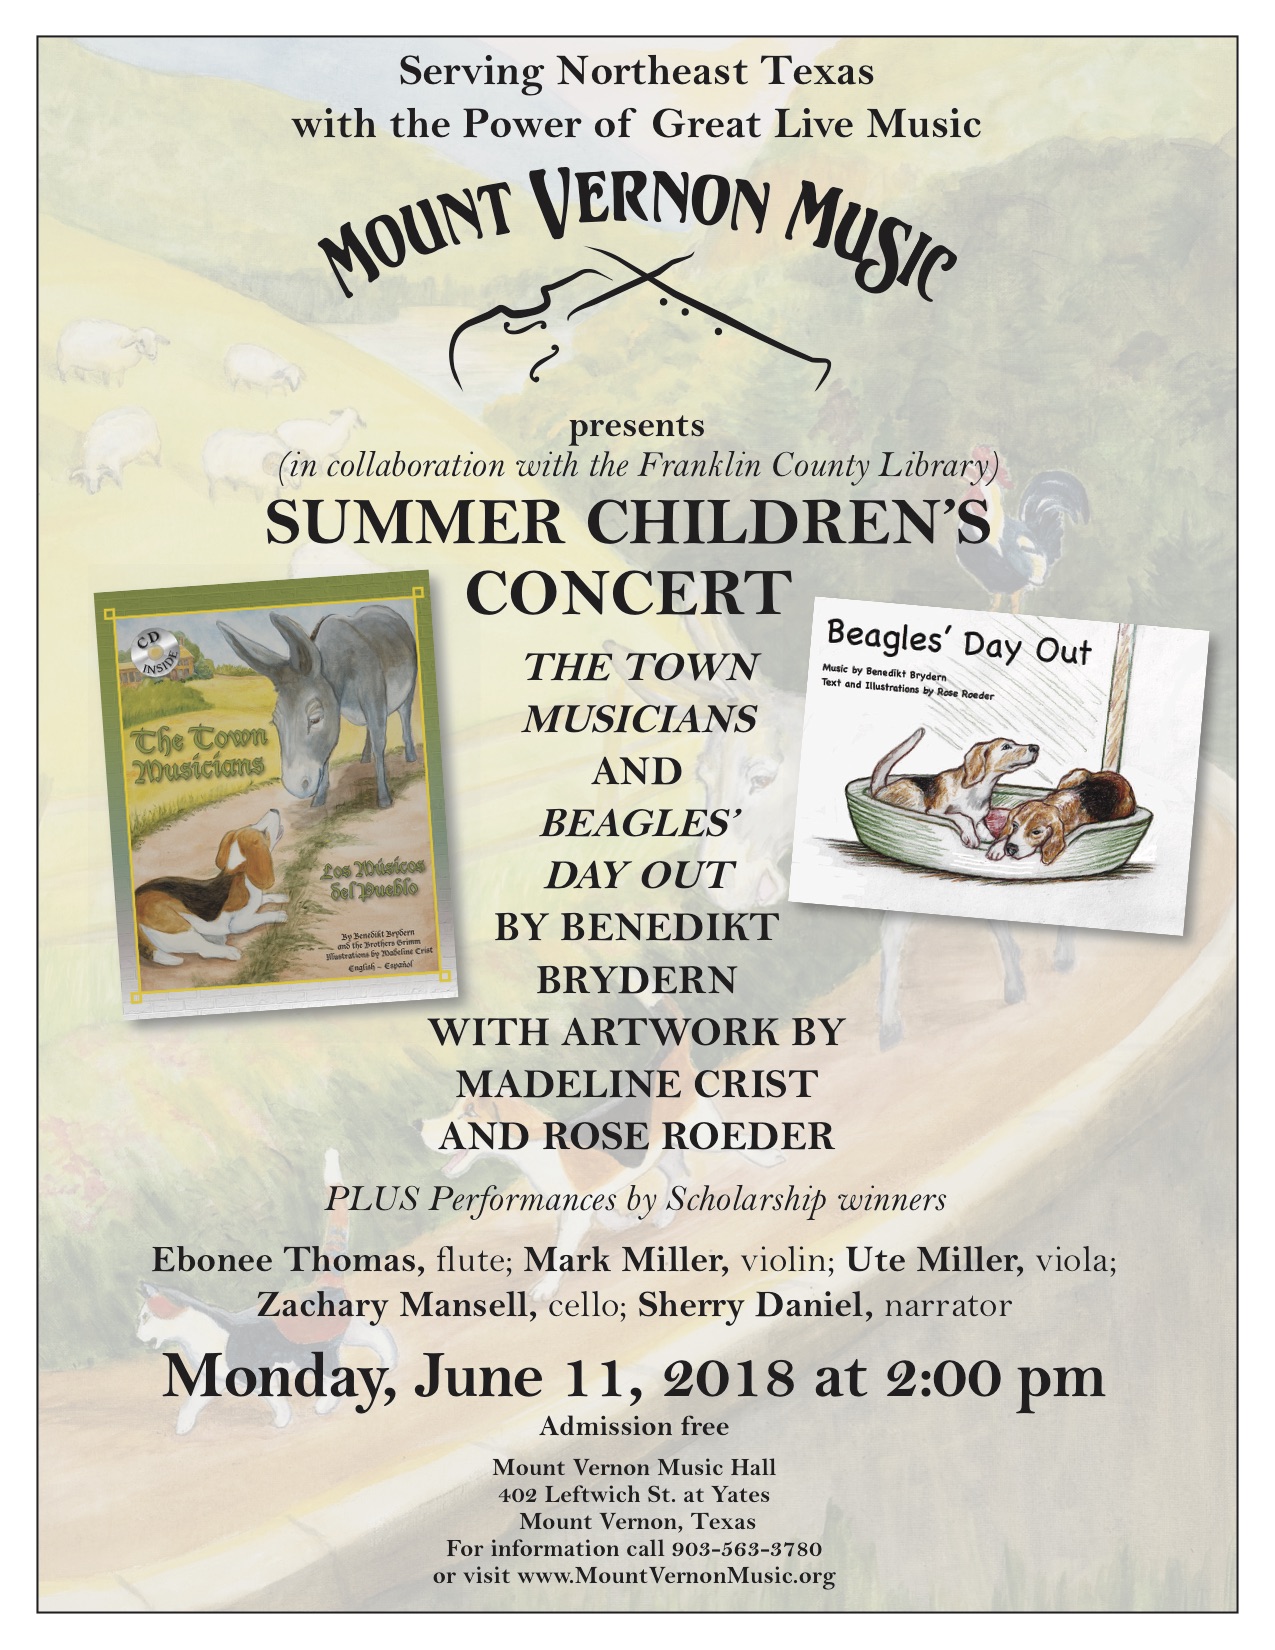 Mount Vernon Music Hosting Free Children’s Concert on Monday June 11th